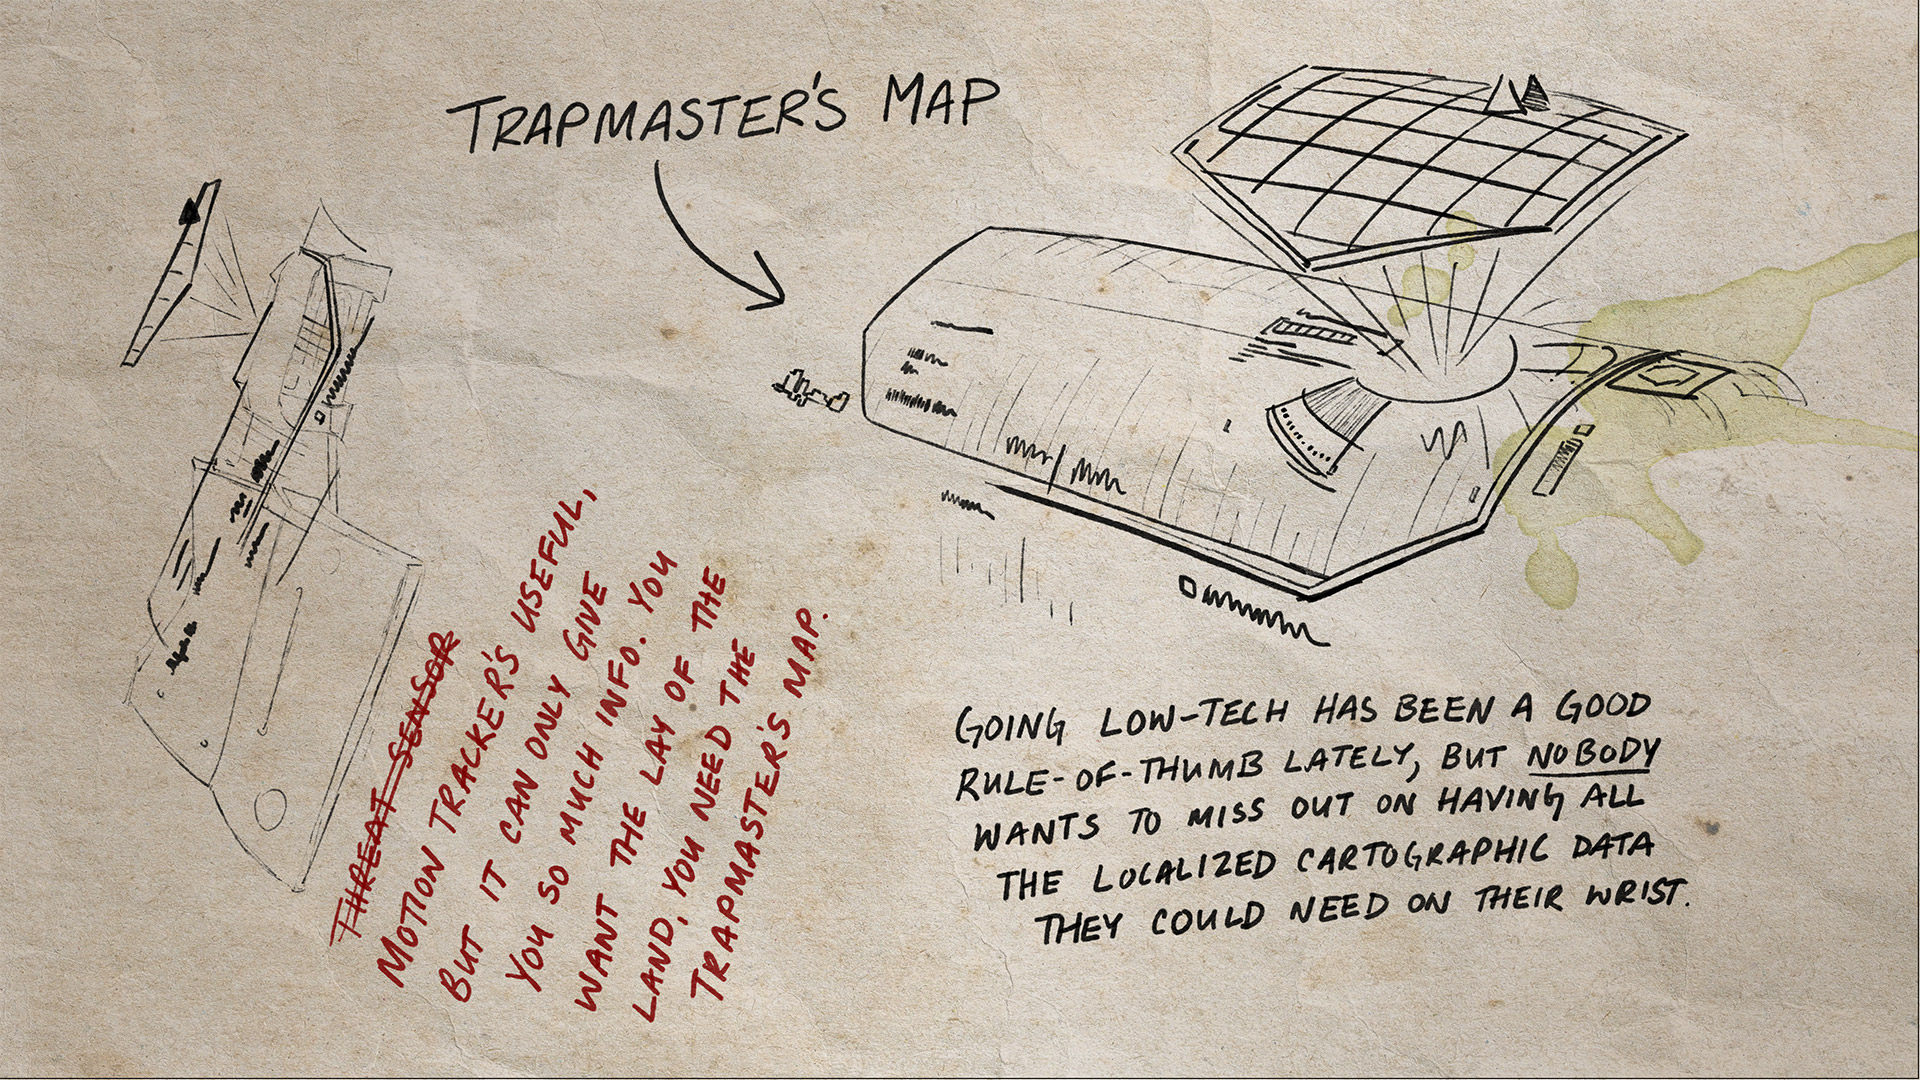 Shot of Trapmaster's Map wrist attachment from Eklund's field journal